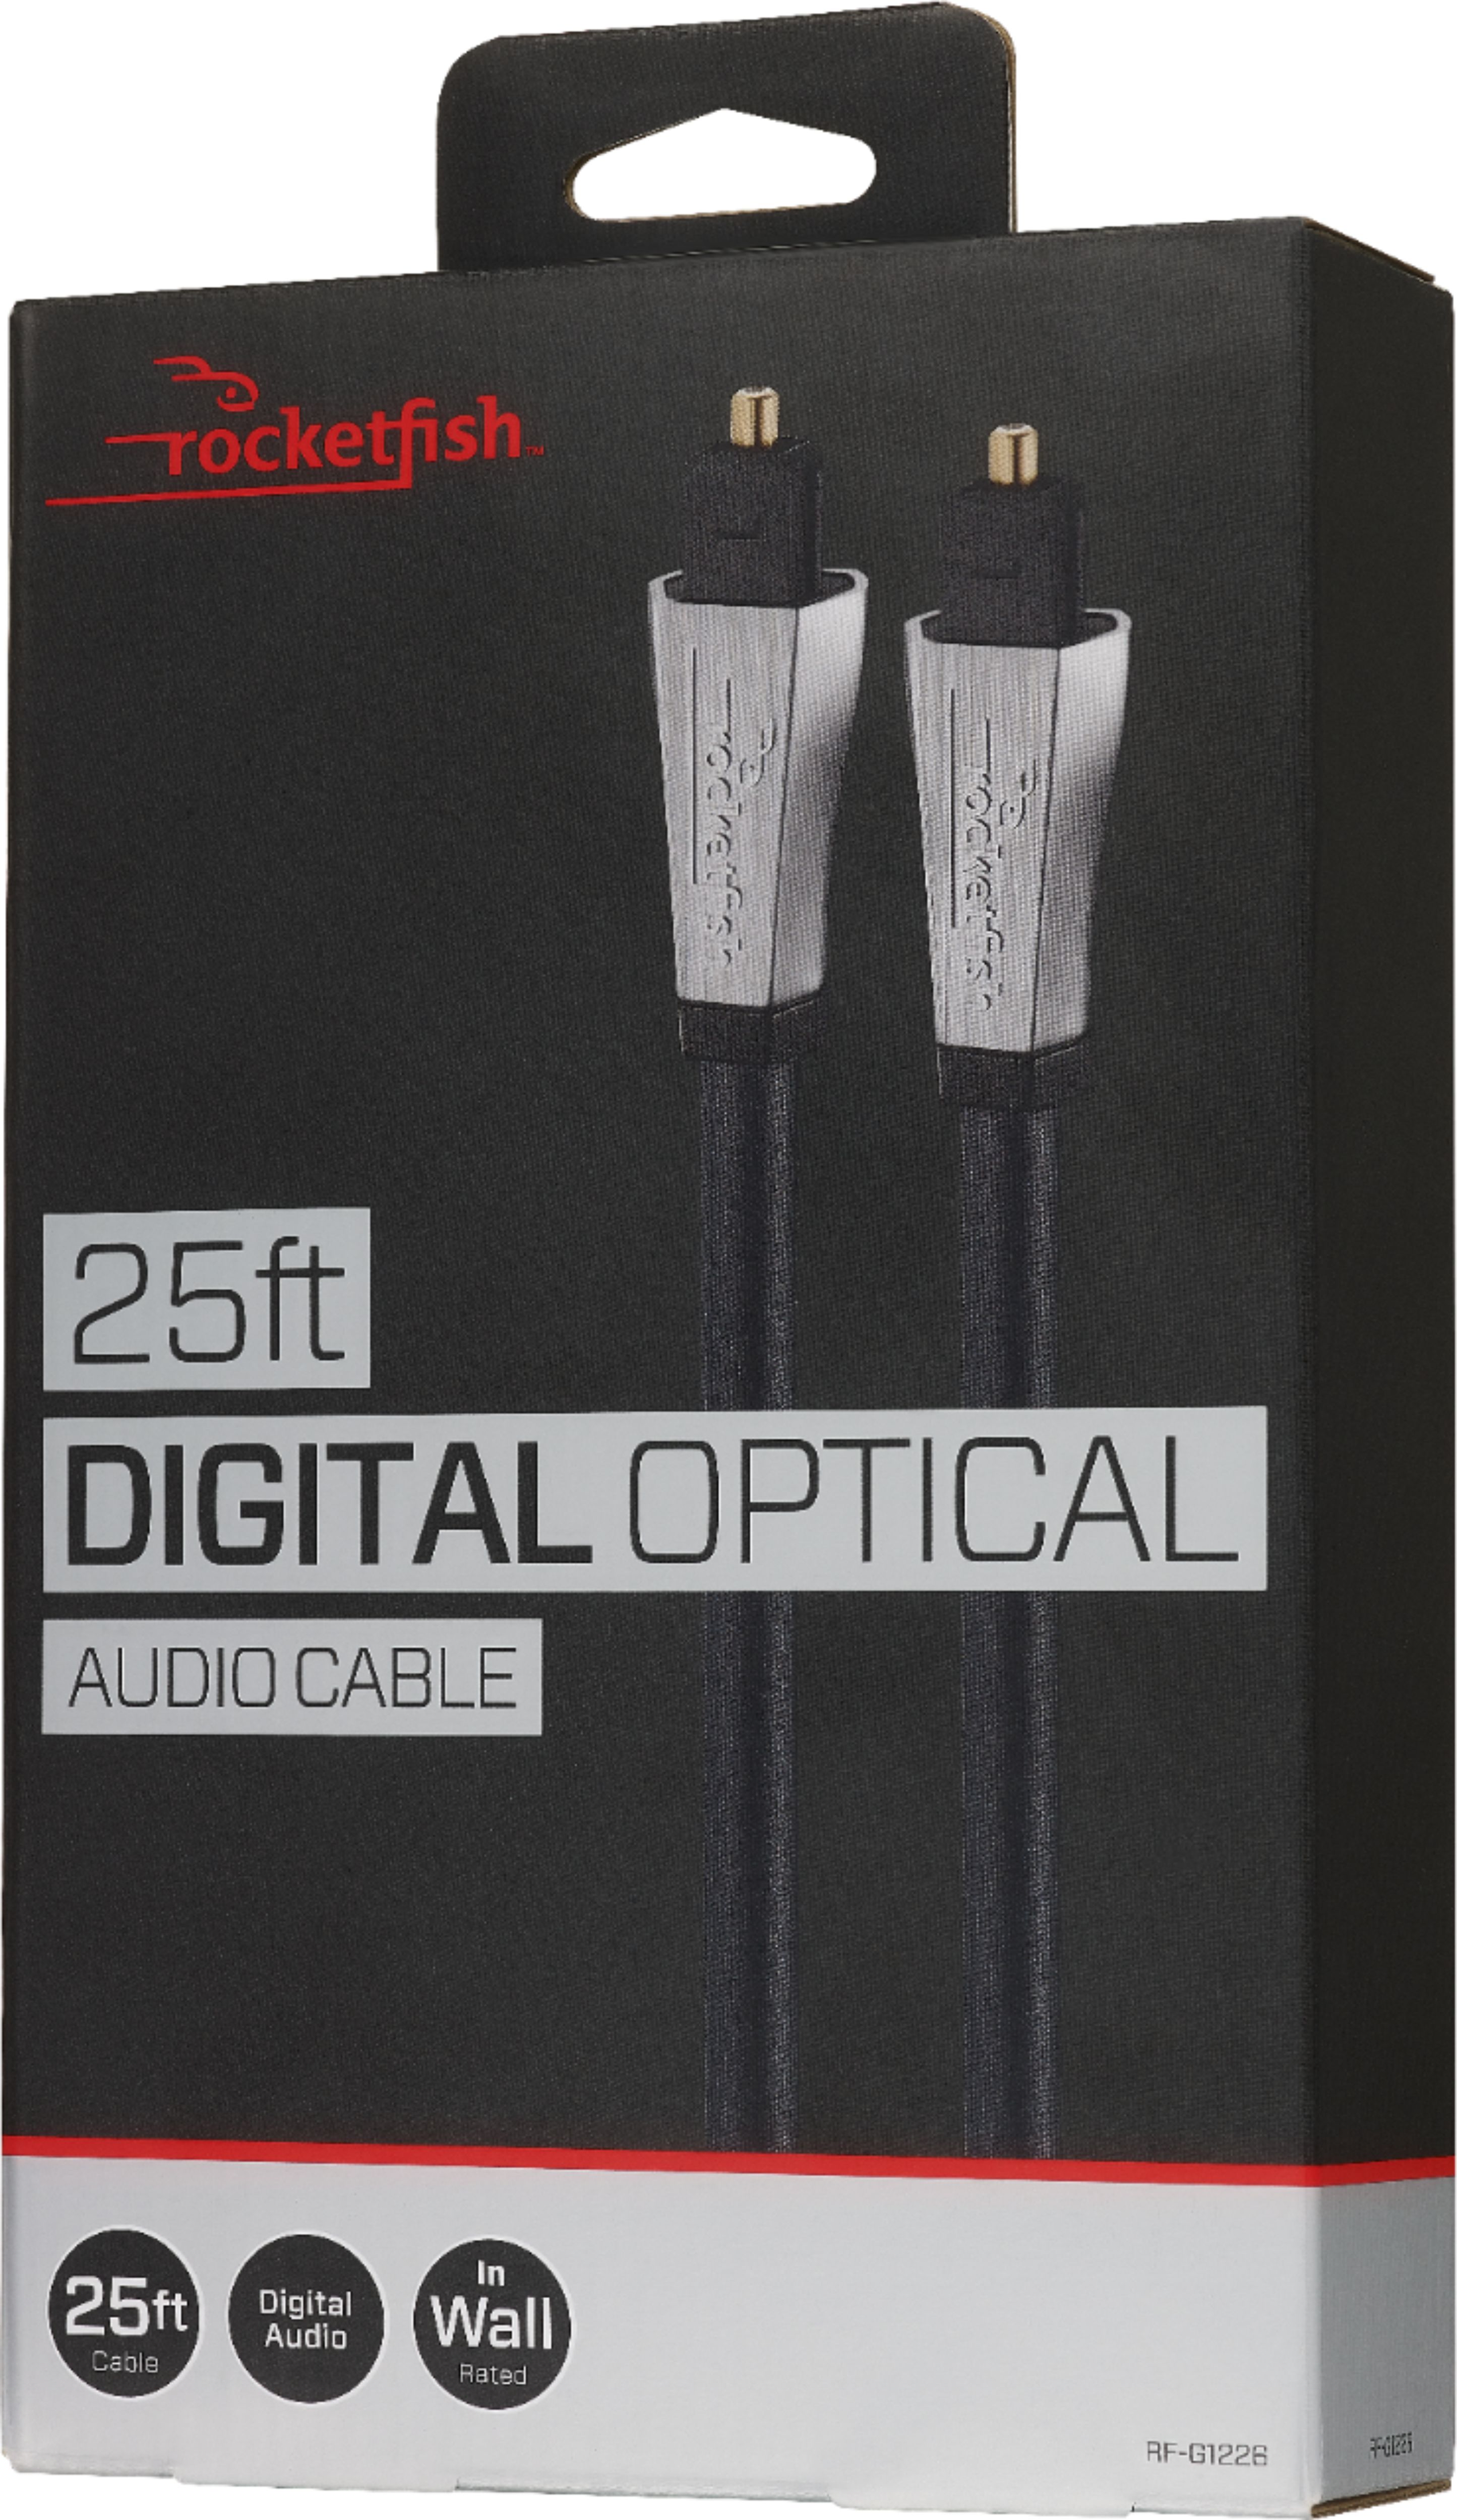 Rocketfish™ 25' Toslink Optical Audio Cable Black RF-G1226 - Best Buy